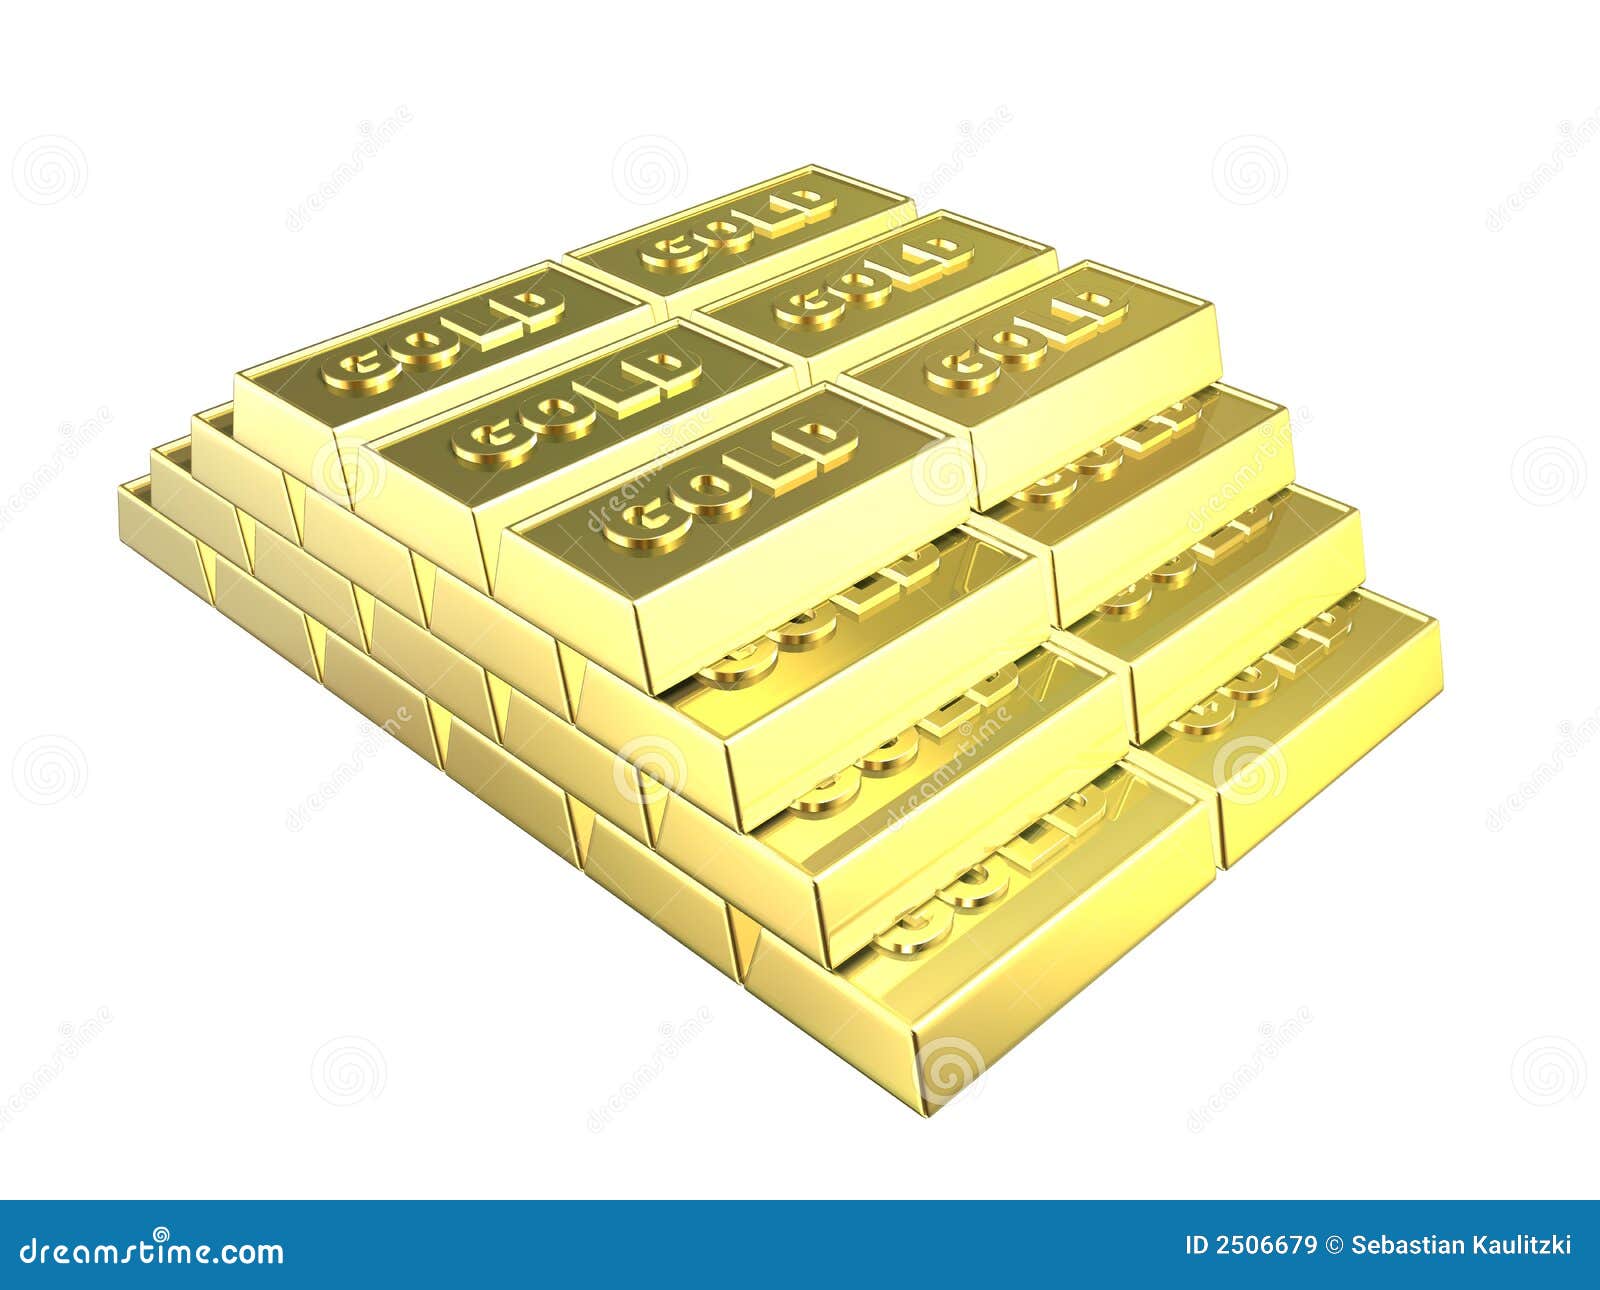 Pyramid Of Gold Bars Royalty Free Stock Images - Image: 2506679